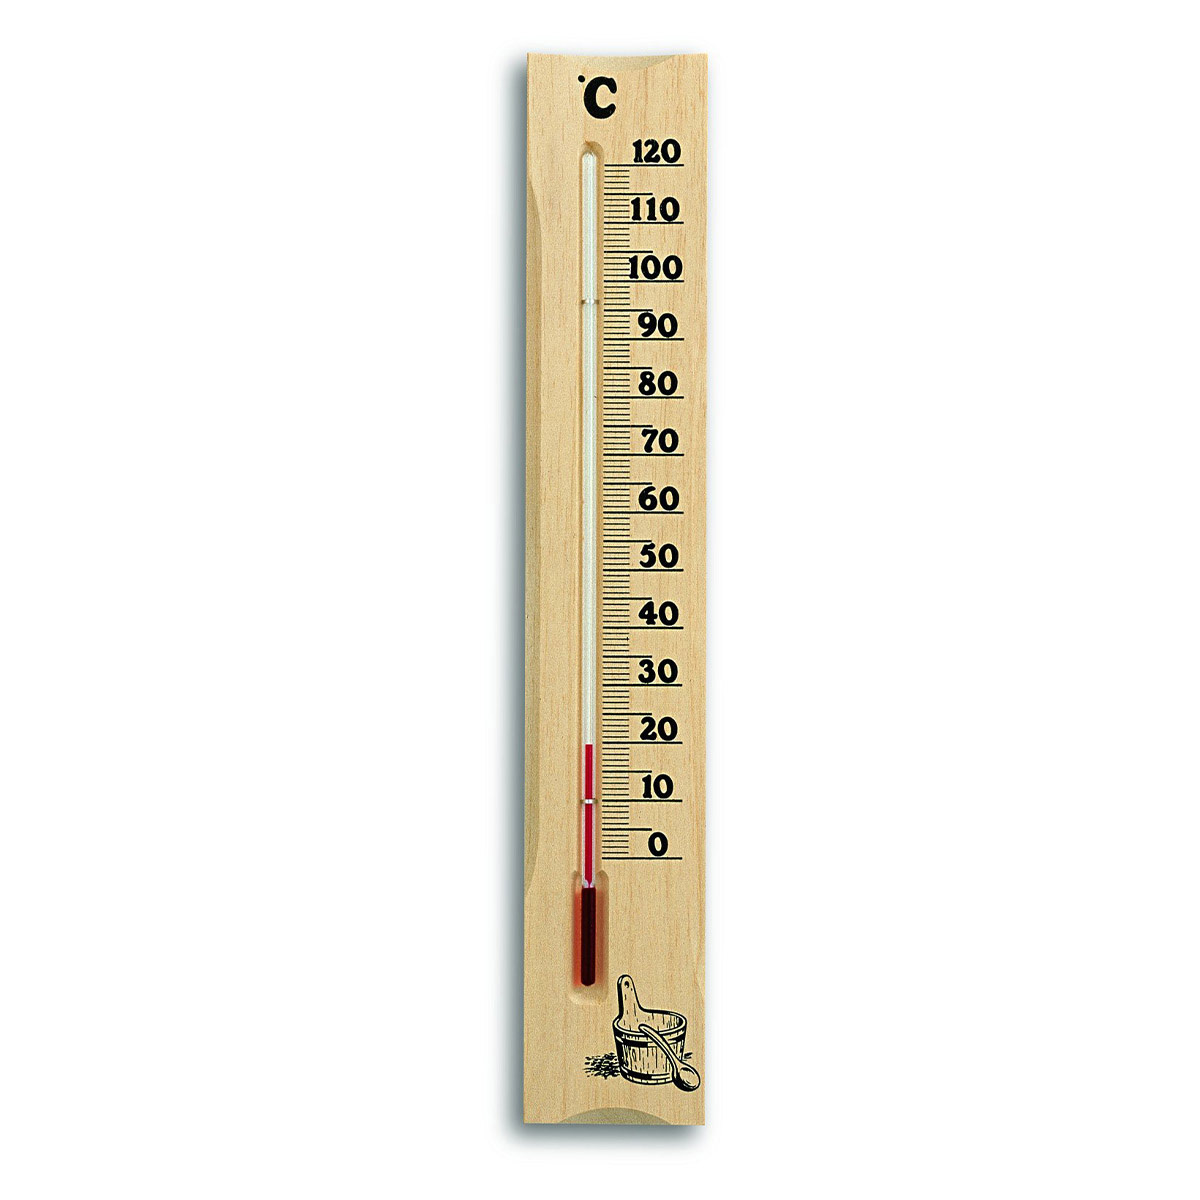 40-1000-analoges-sauna-thermometer-kiefer-1200x1200px.jpg